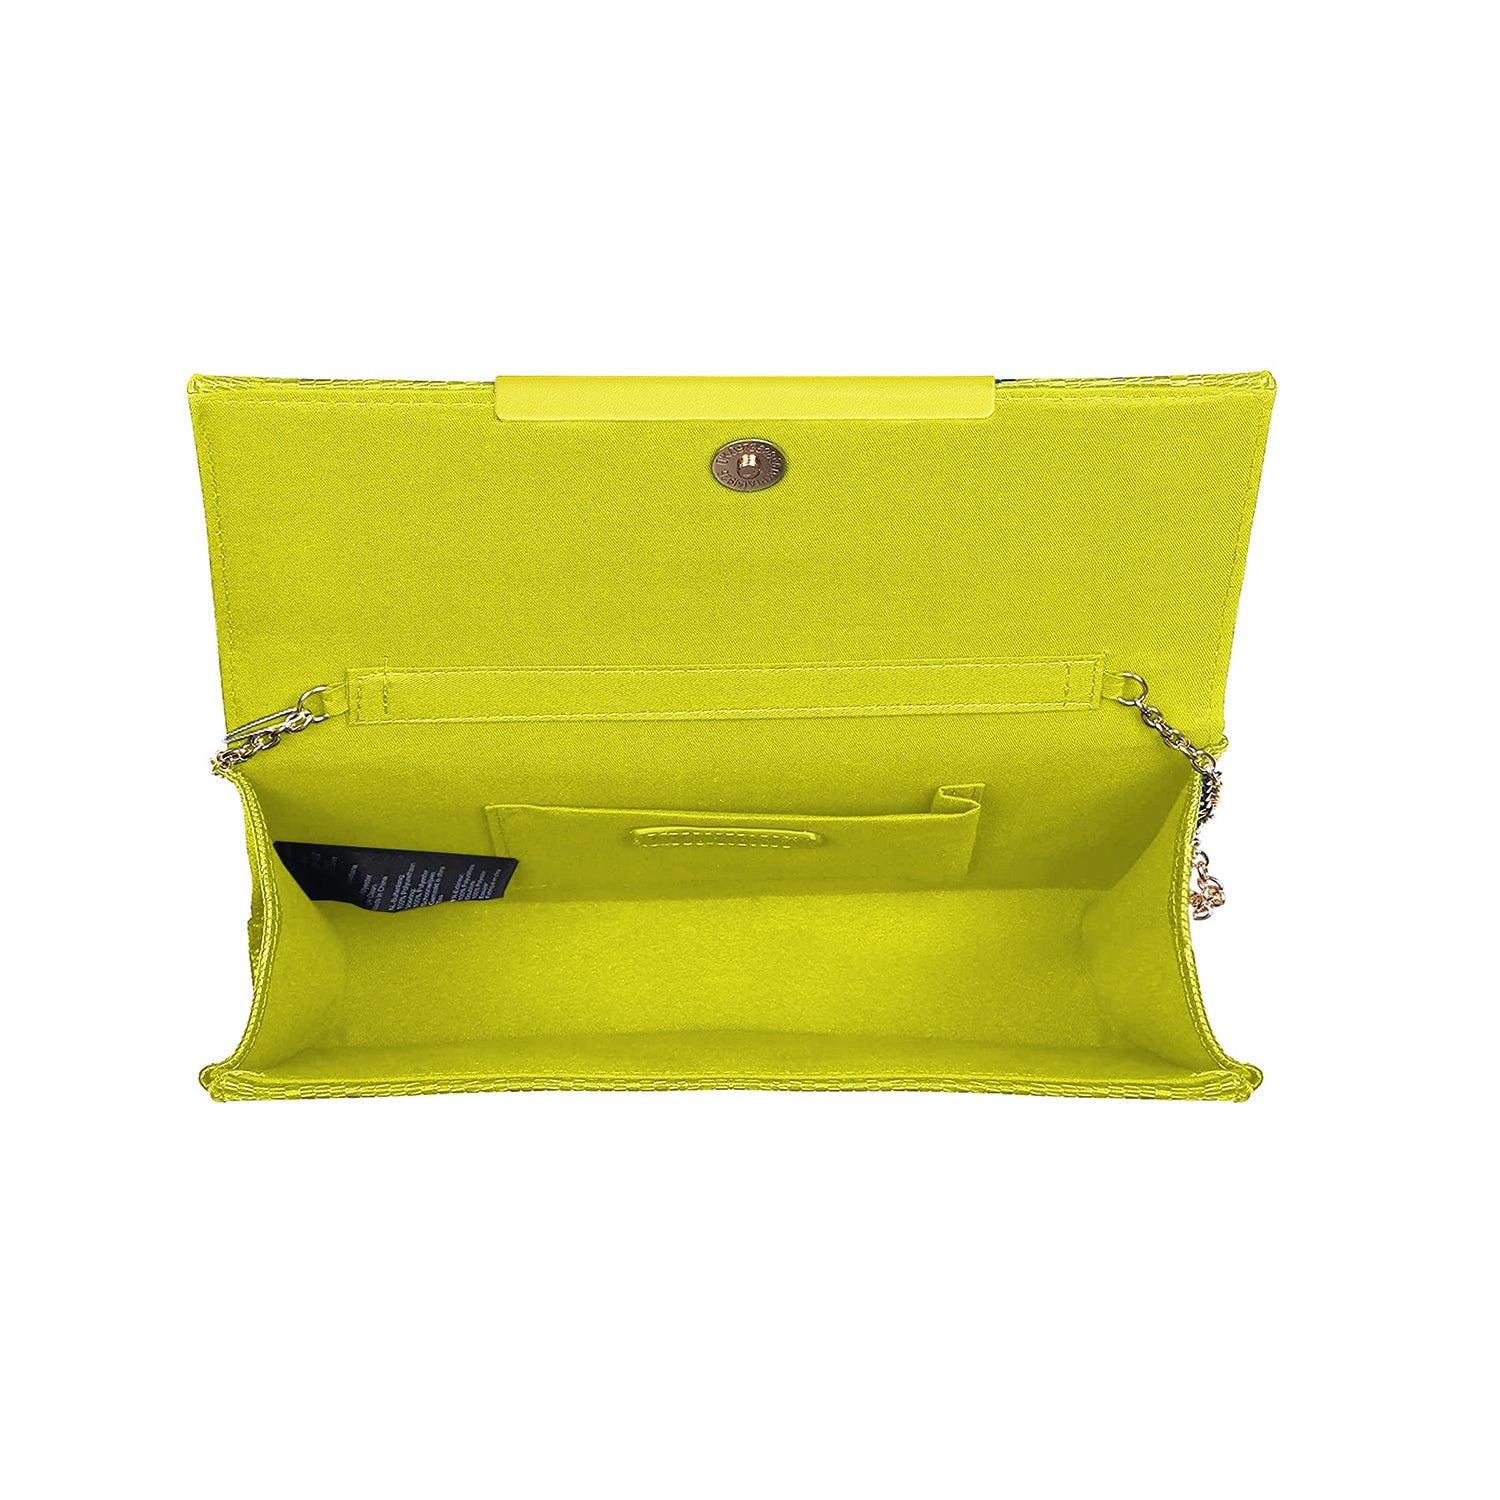 REBECCA MINKOFF Leo Clutch in Neon Green - Bags and purses